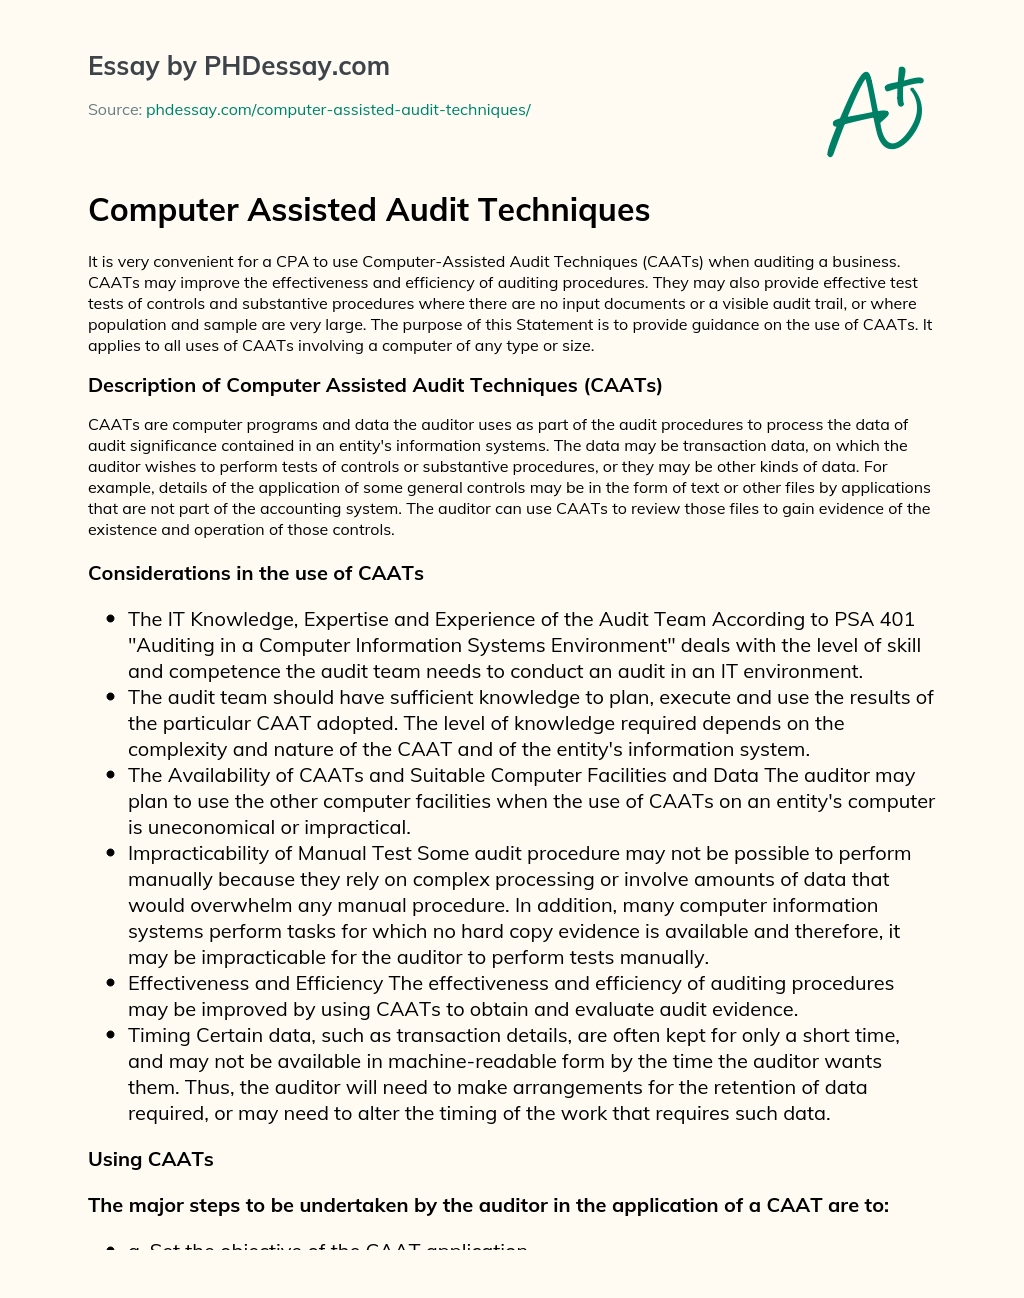 Computer Assisted Audit Techniques essay